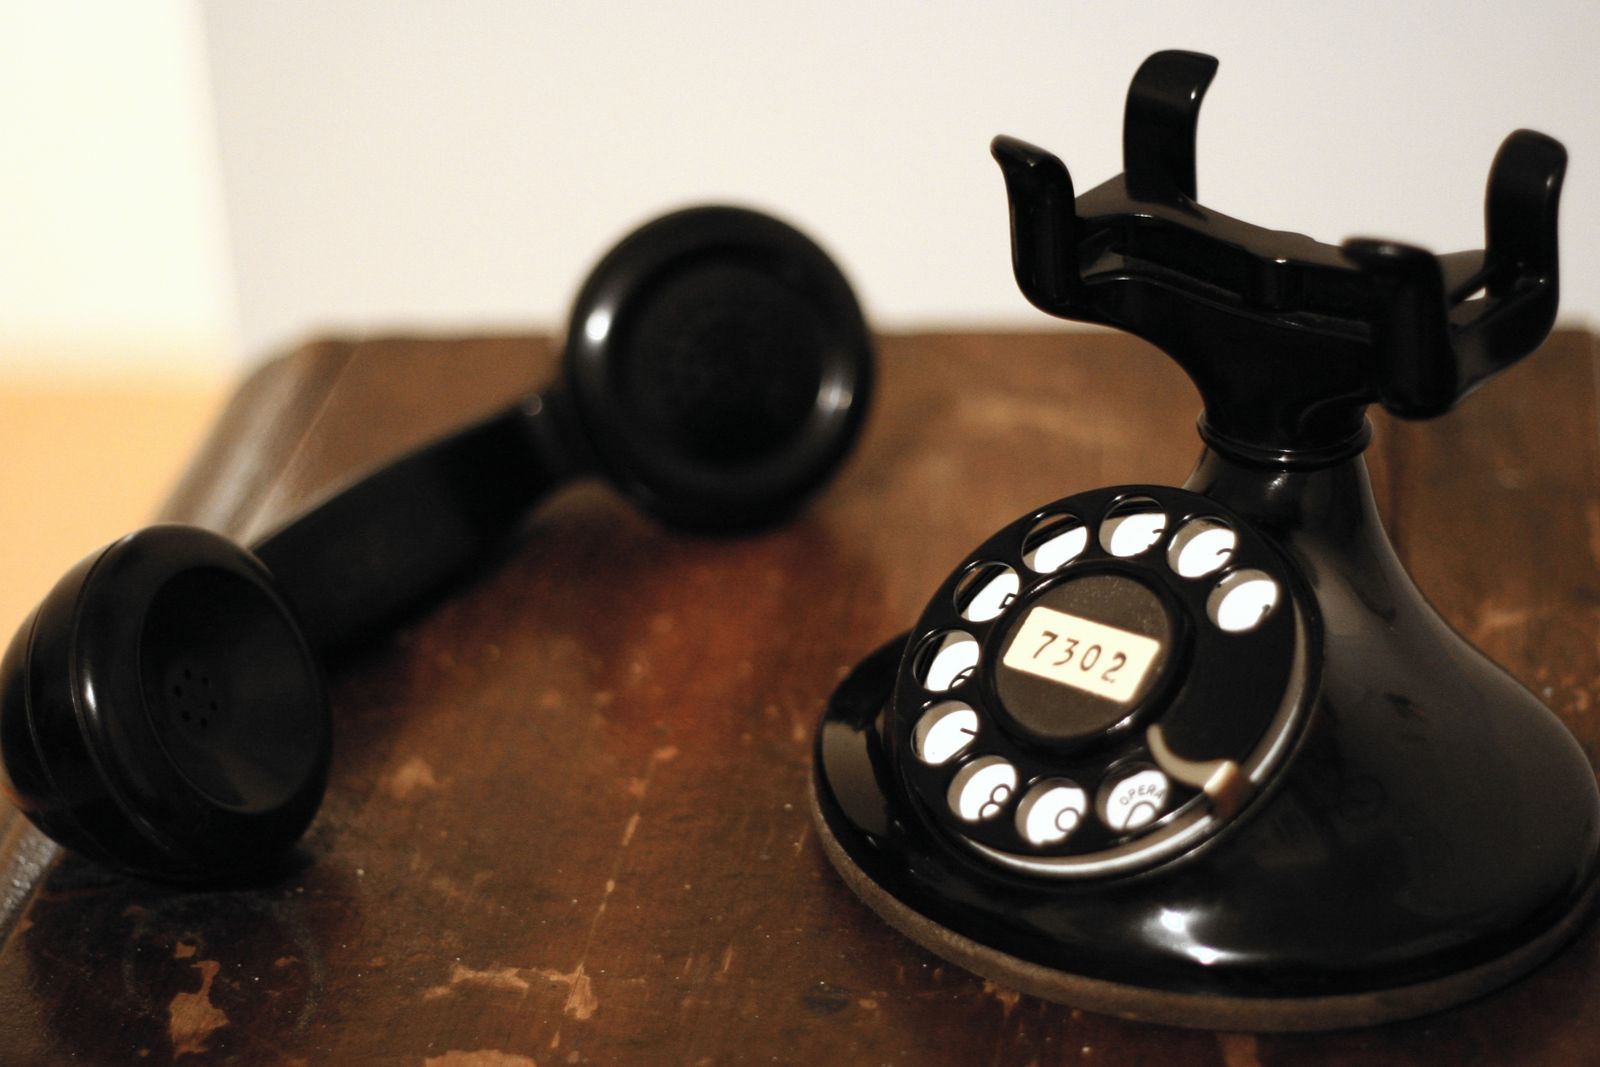 third telephone invented